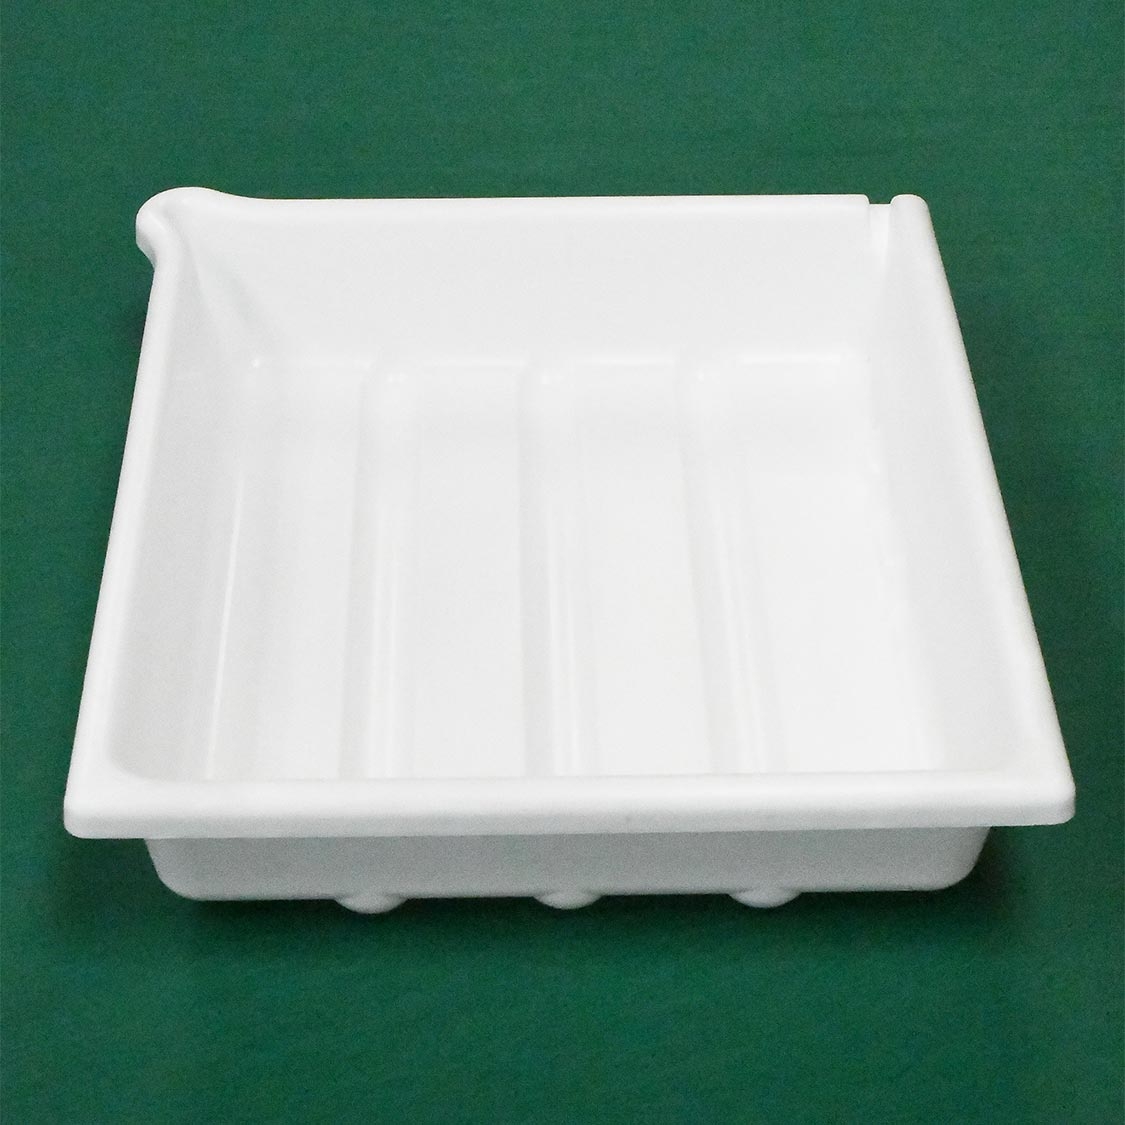 Paterson 8x10-inch Tray (white)